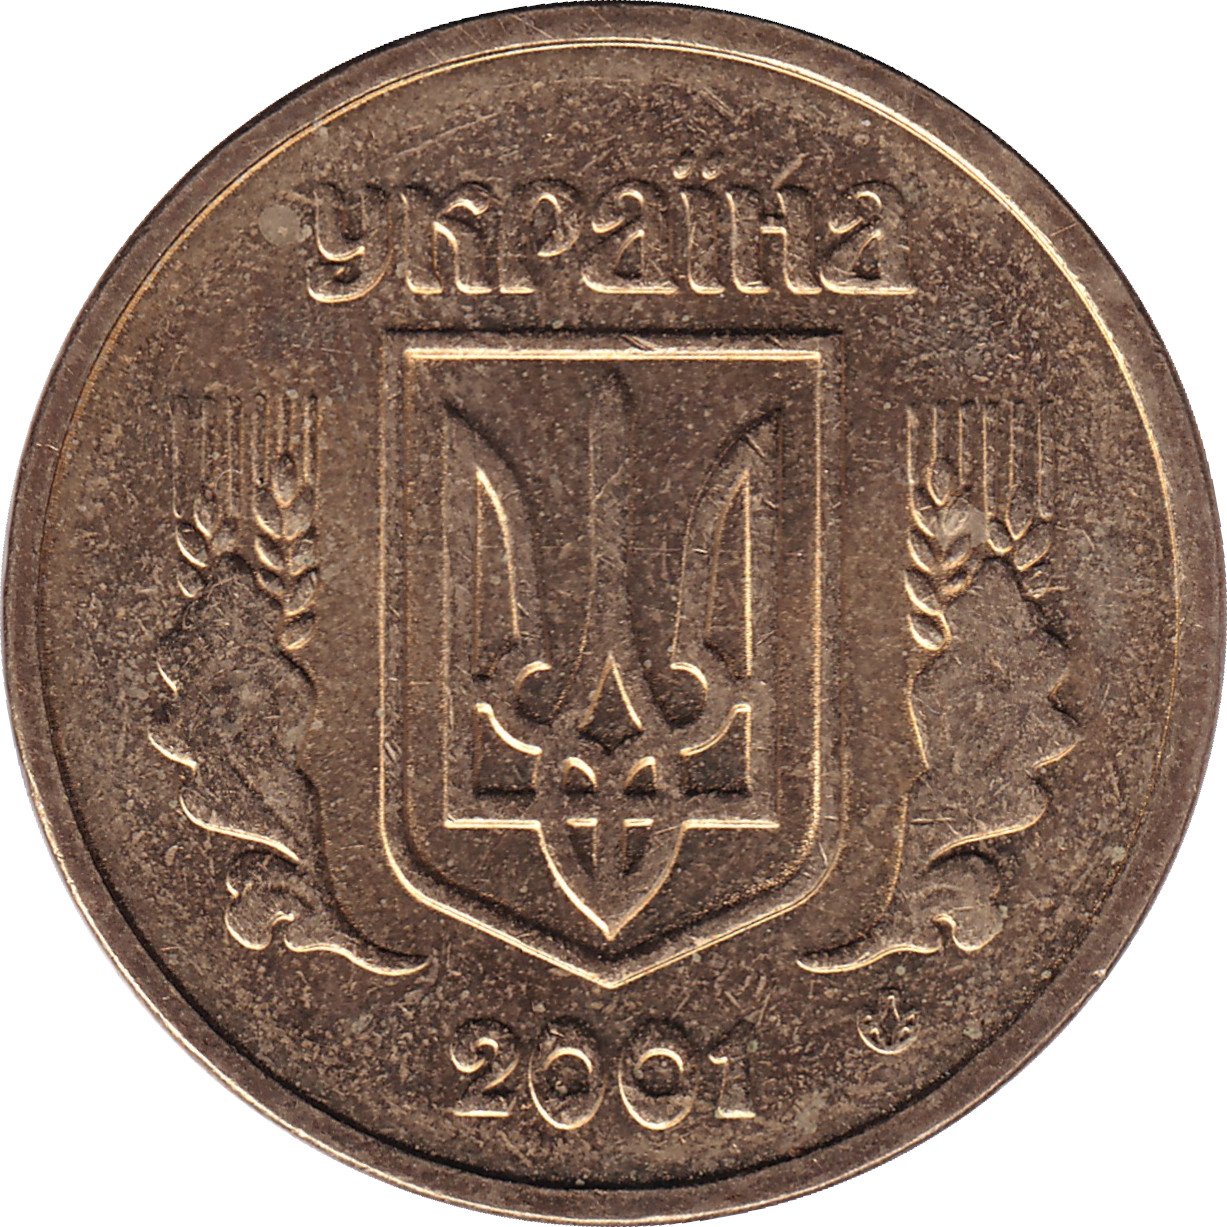 1 hryvnia - Emblème